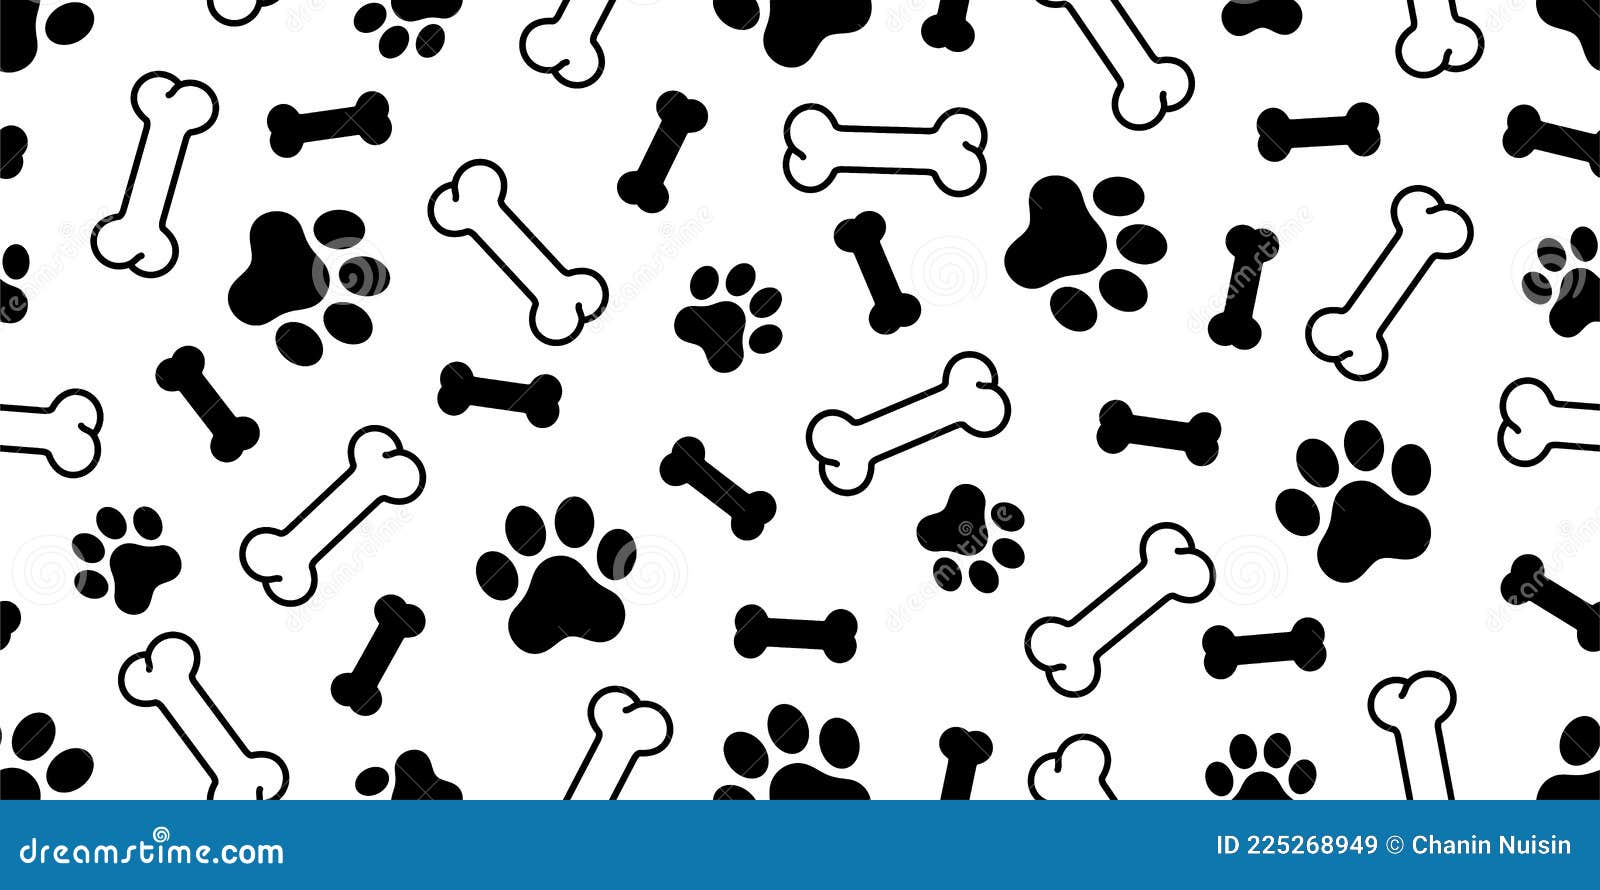 100 Silhouette Of Dog Bone Wallpaper Illustrations RoyaltyFree Vector  Graphics  Clip Art  iStock